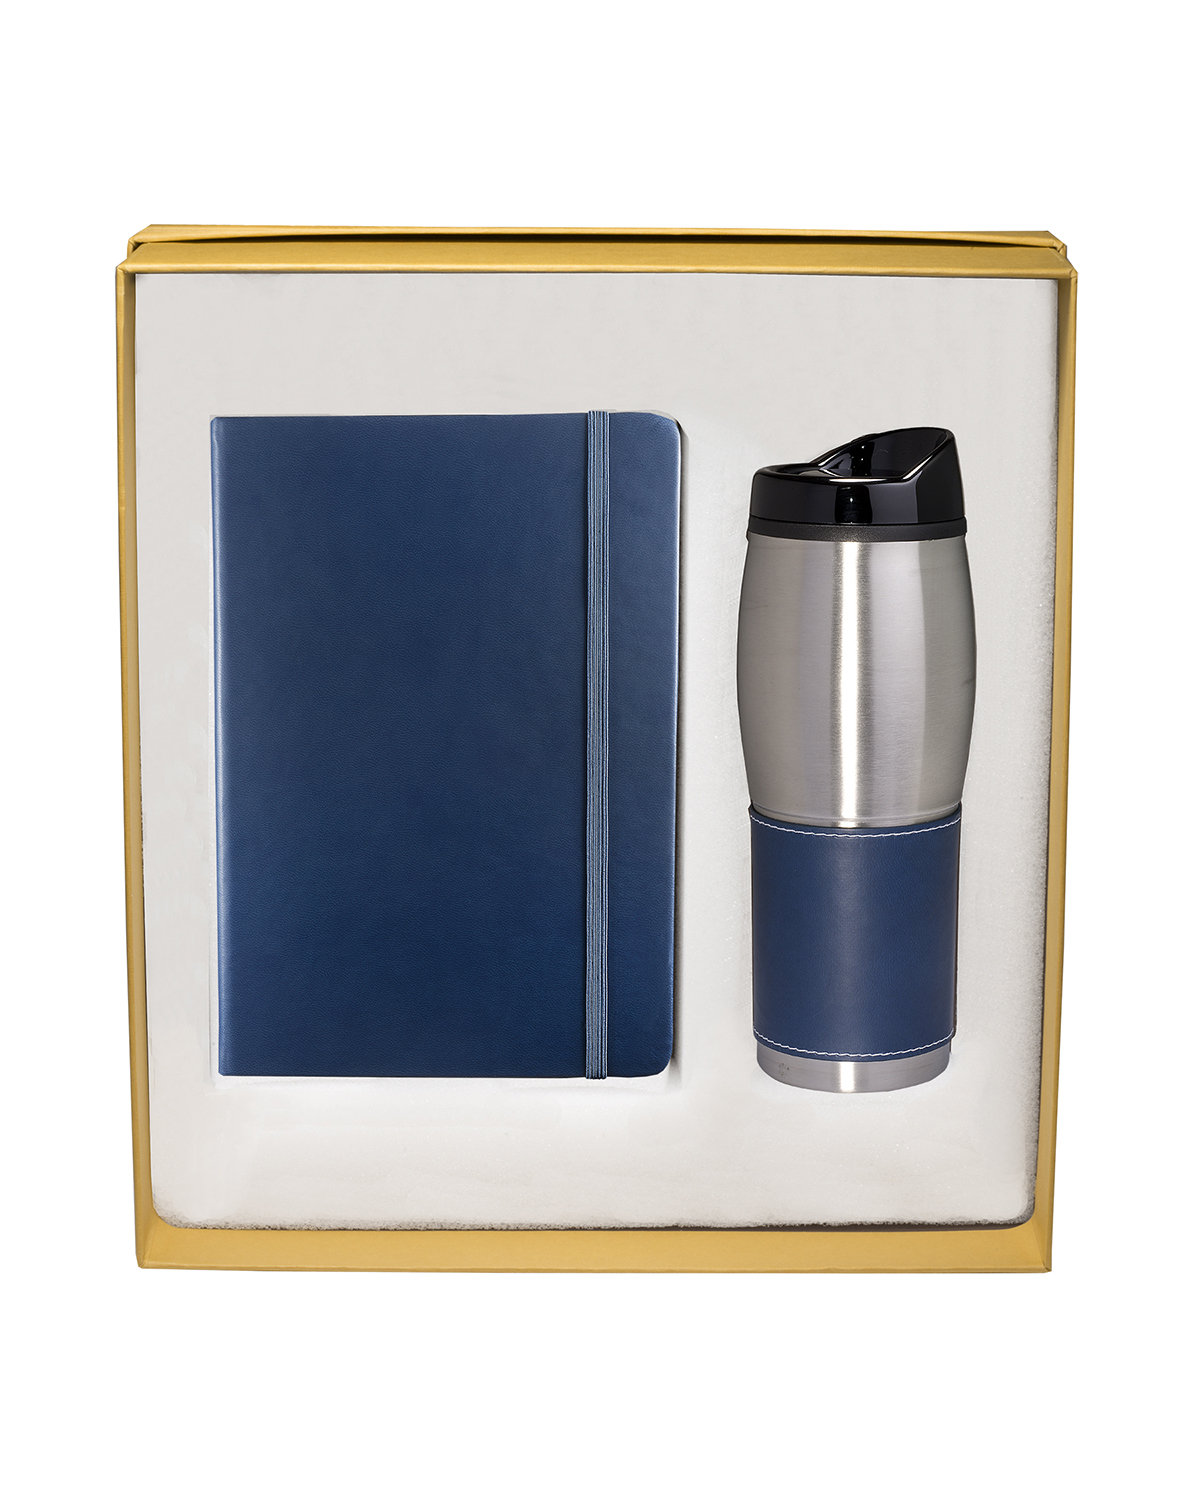 Leeman Tuscany™ Journal And Tumbler Gift Set navy blue 